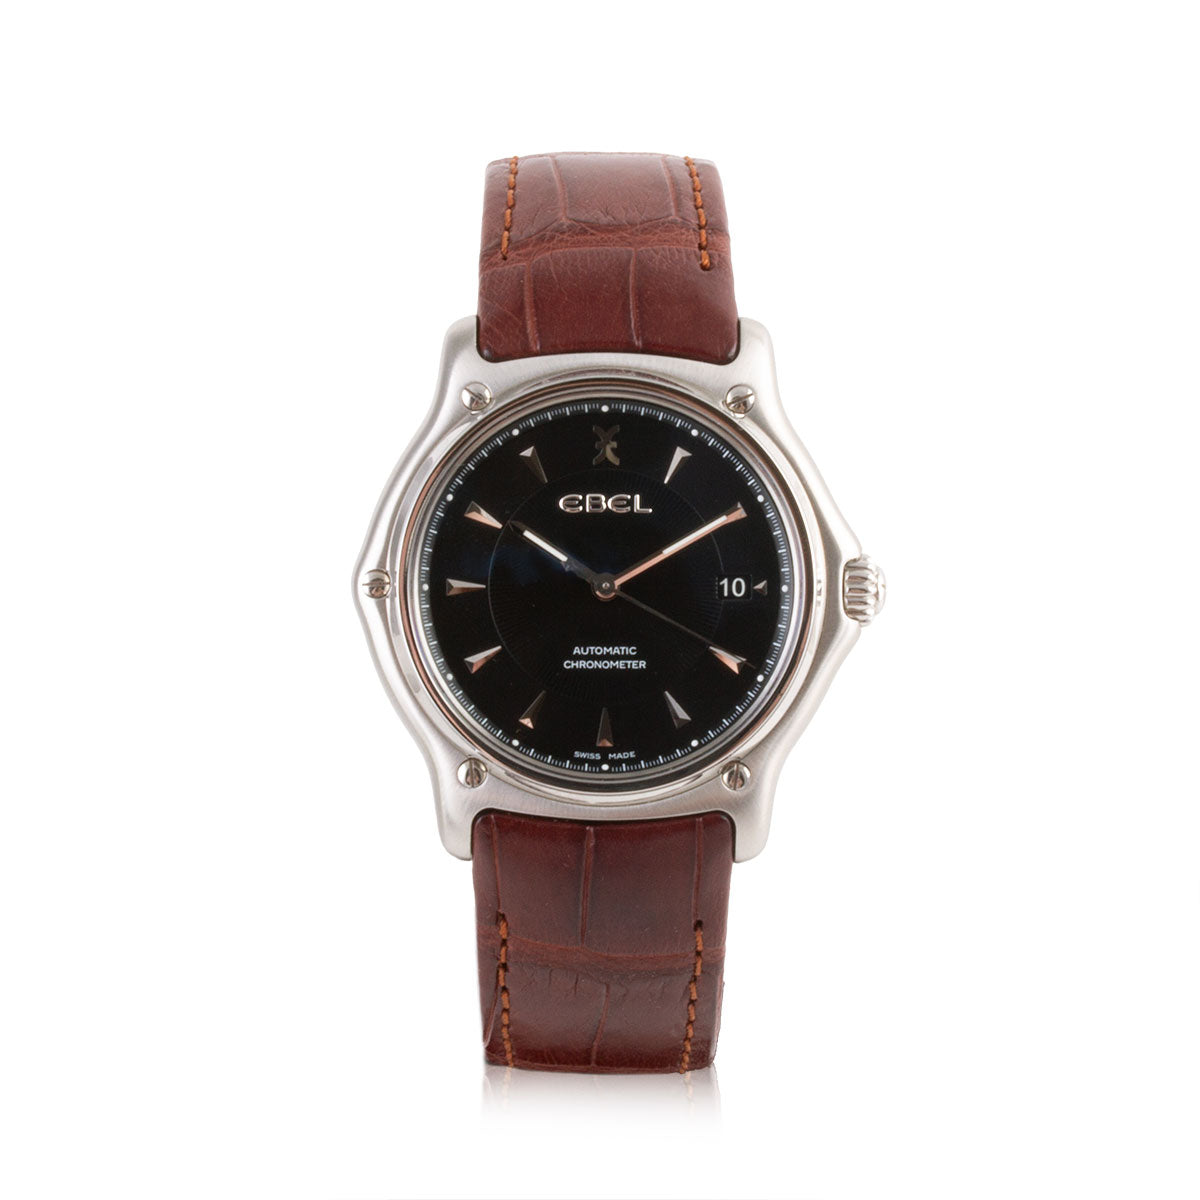 Second-hand watch - Ebel - 1800€